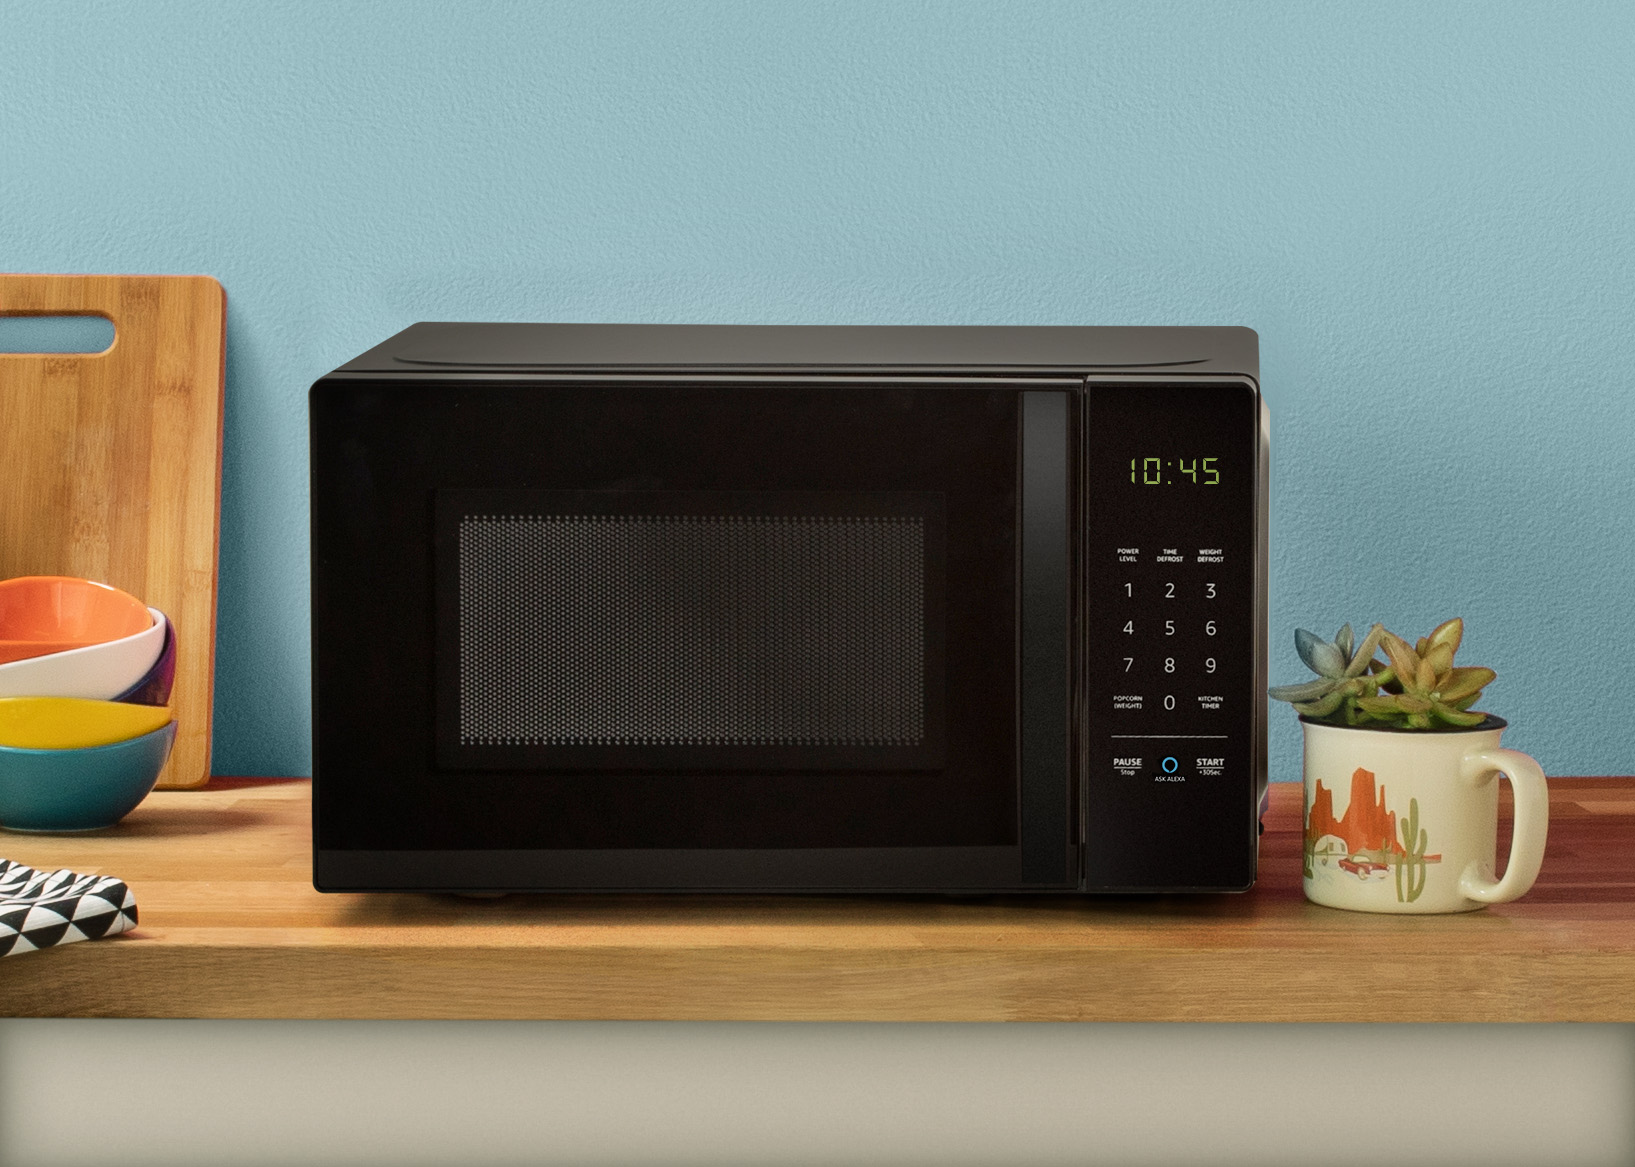 We tried Amazon’s bizarre Alexa microwave and weren’t convinced | TechCrunch